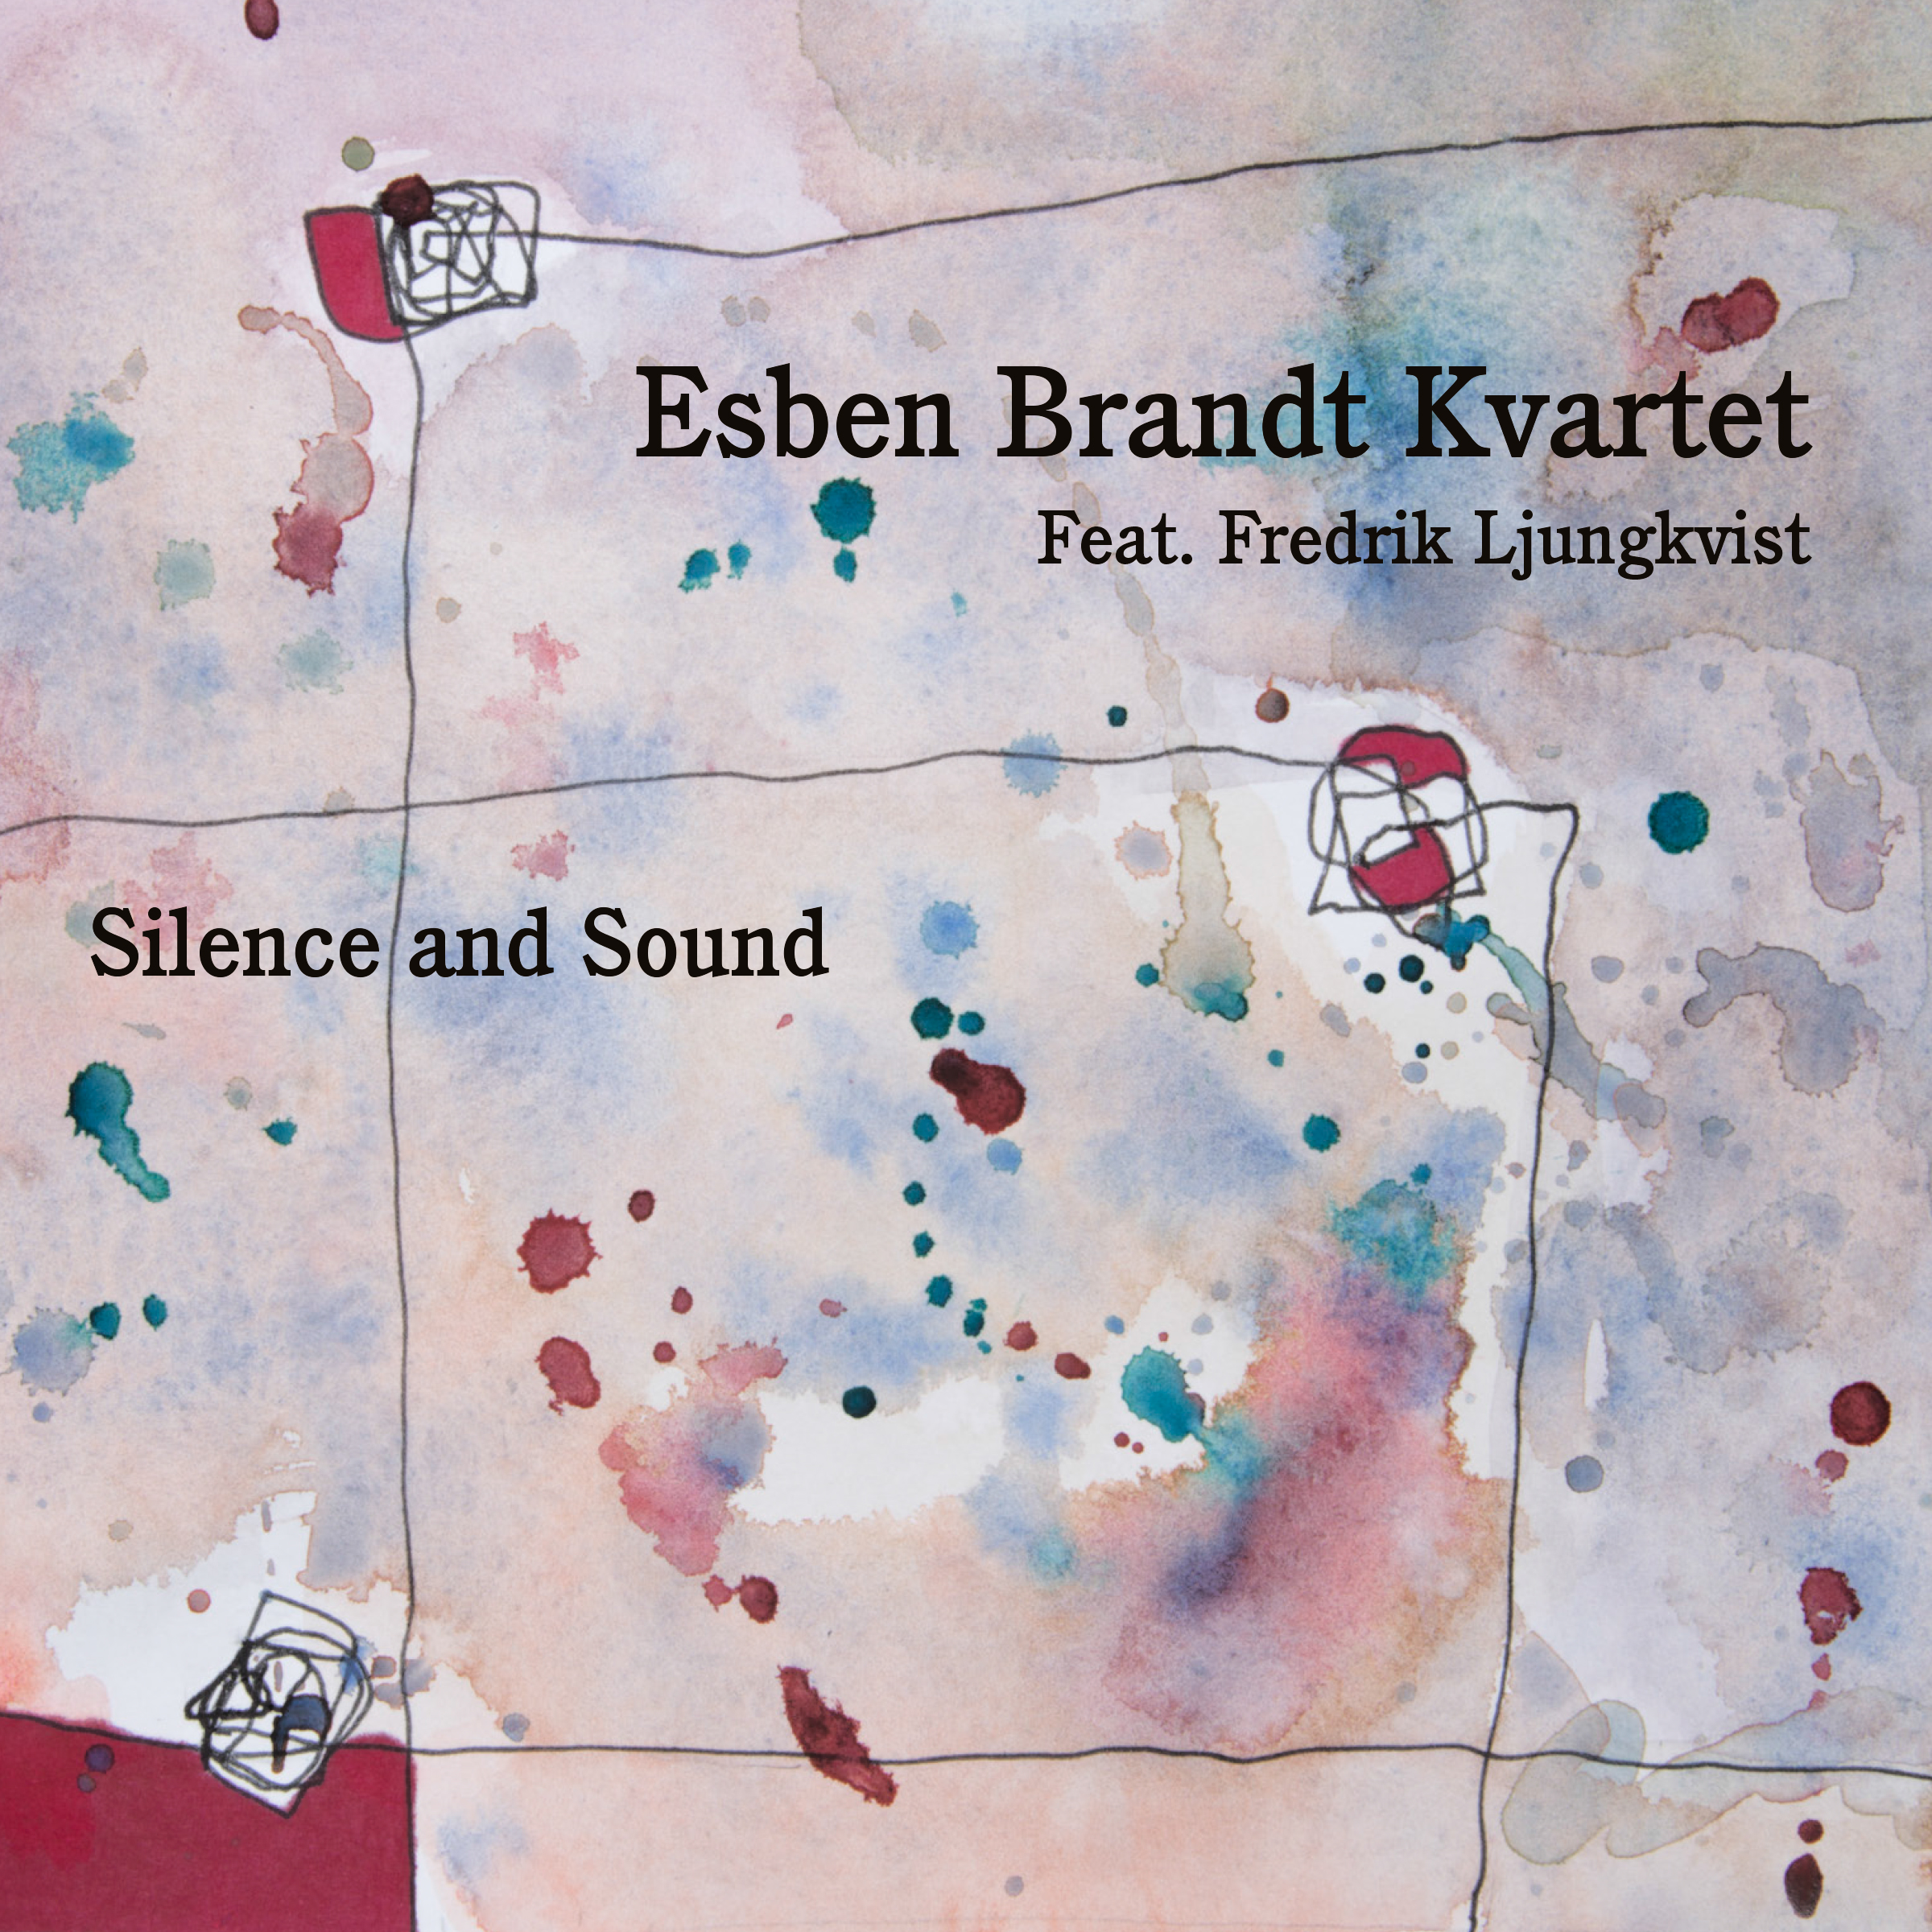 Silence and Sound - Esben Brandt Kvartet feat. Fredrik Ljungkvist